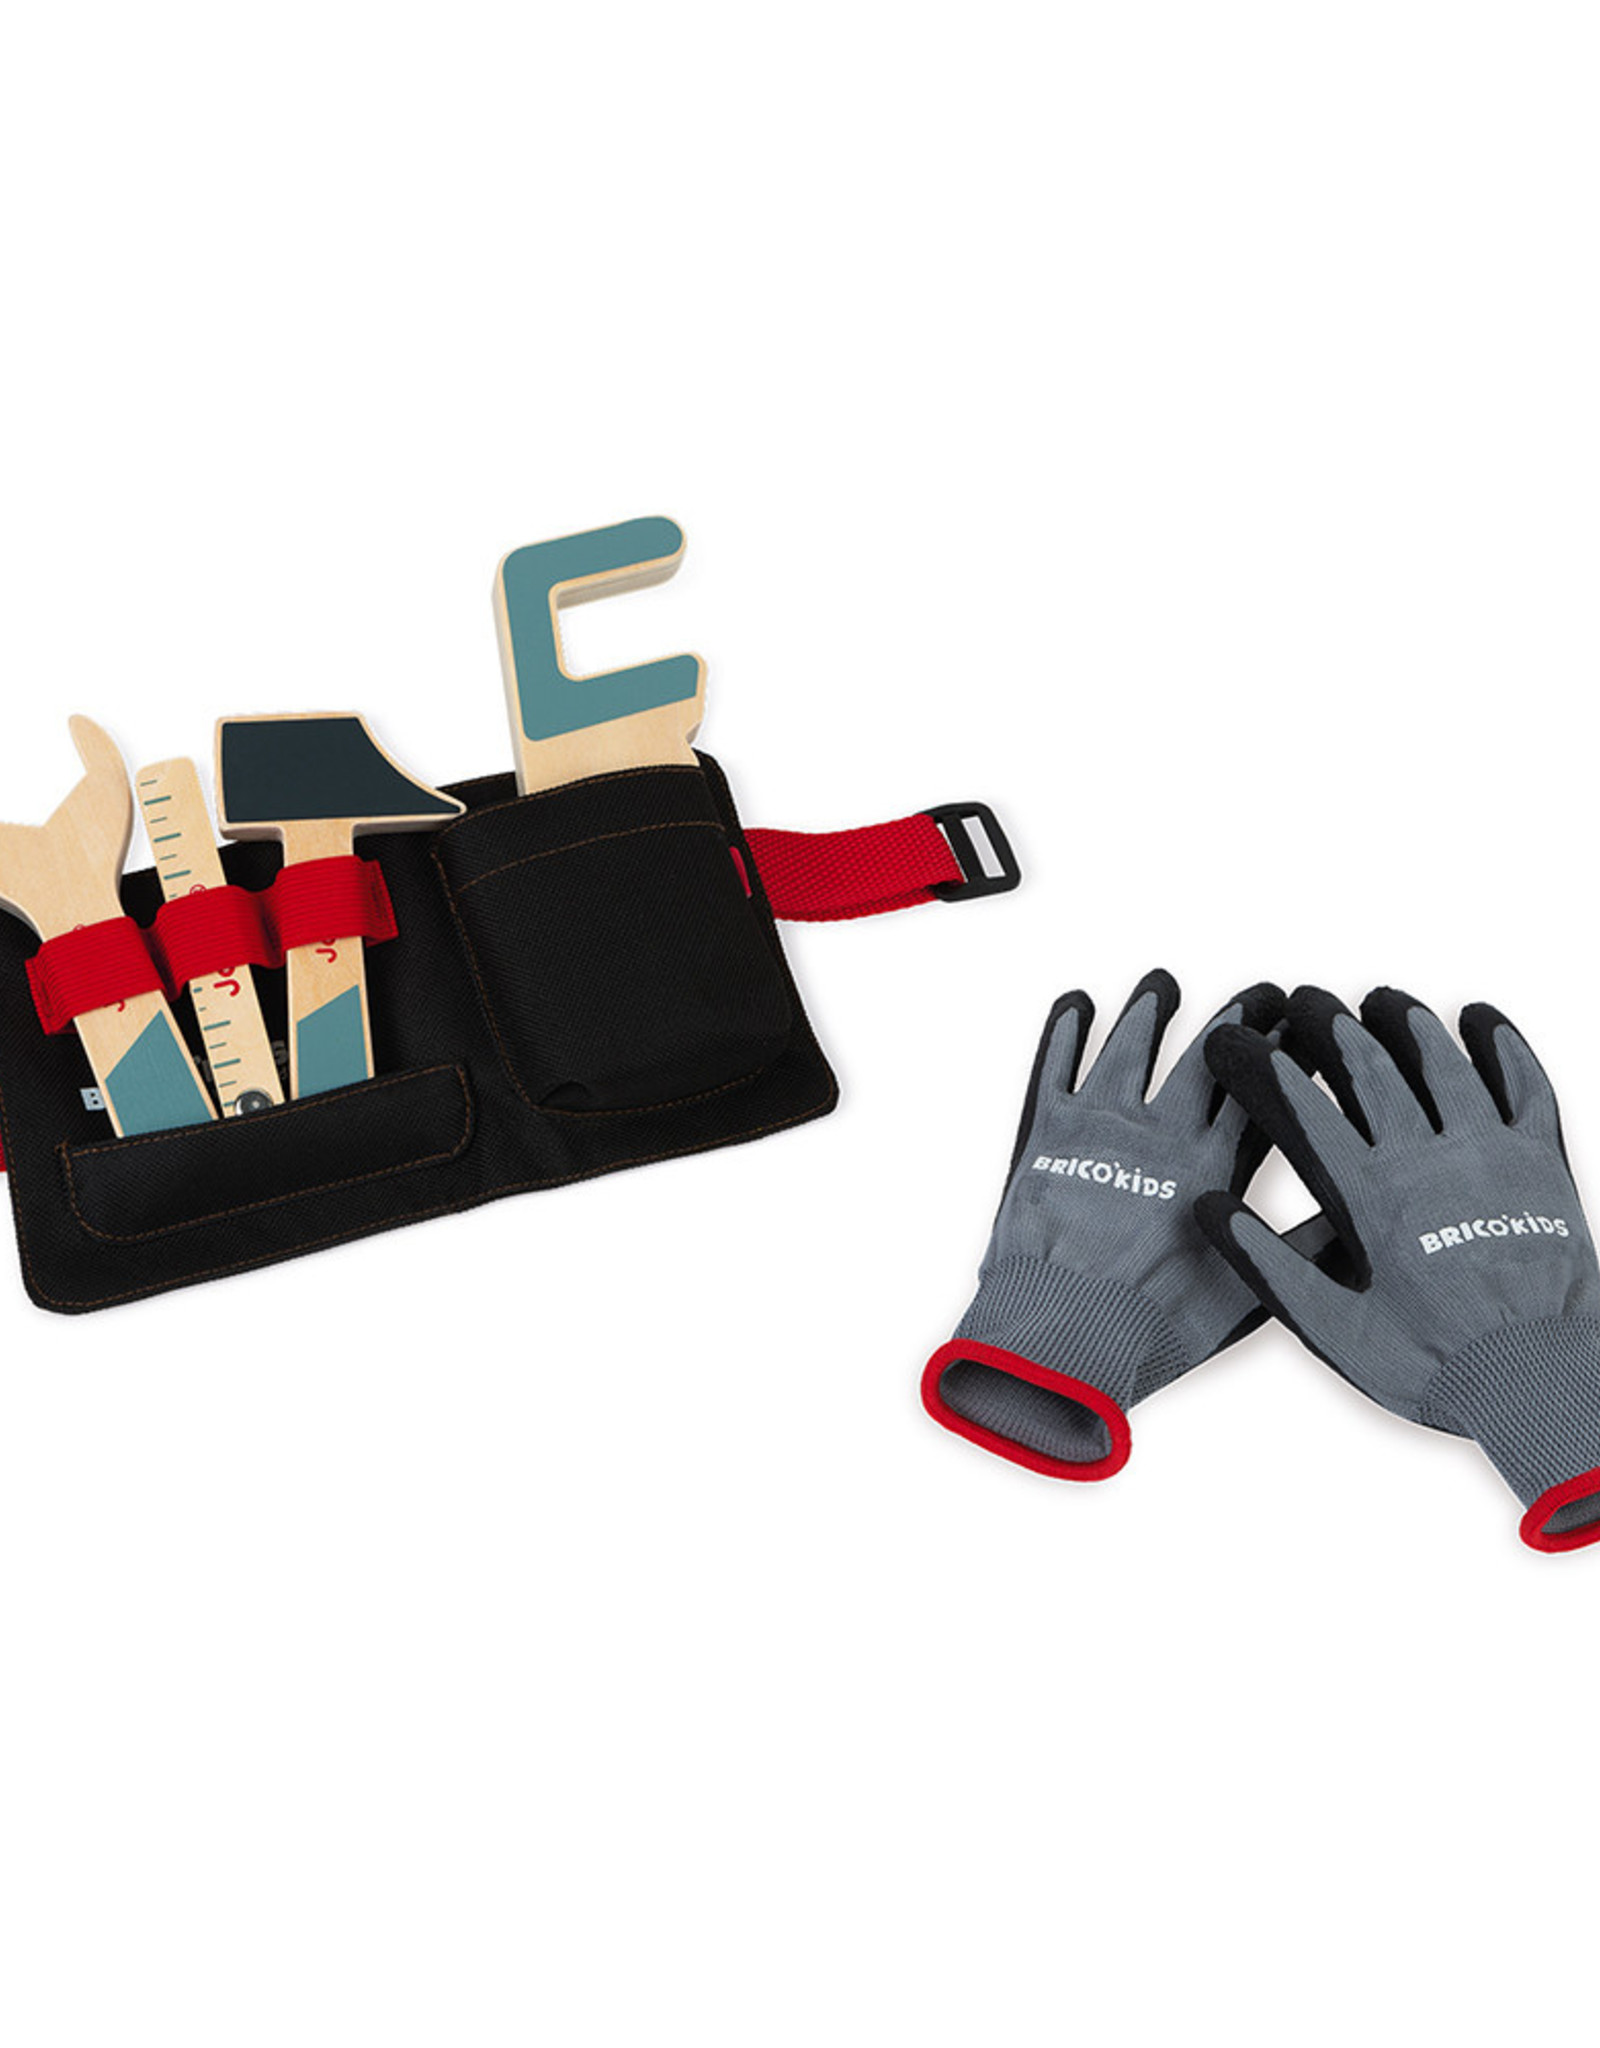 Janod Brico'Kids Tool Belt and Gloves Set